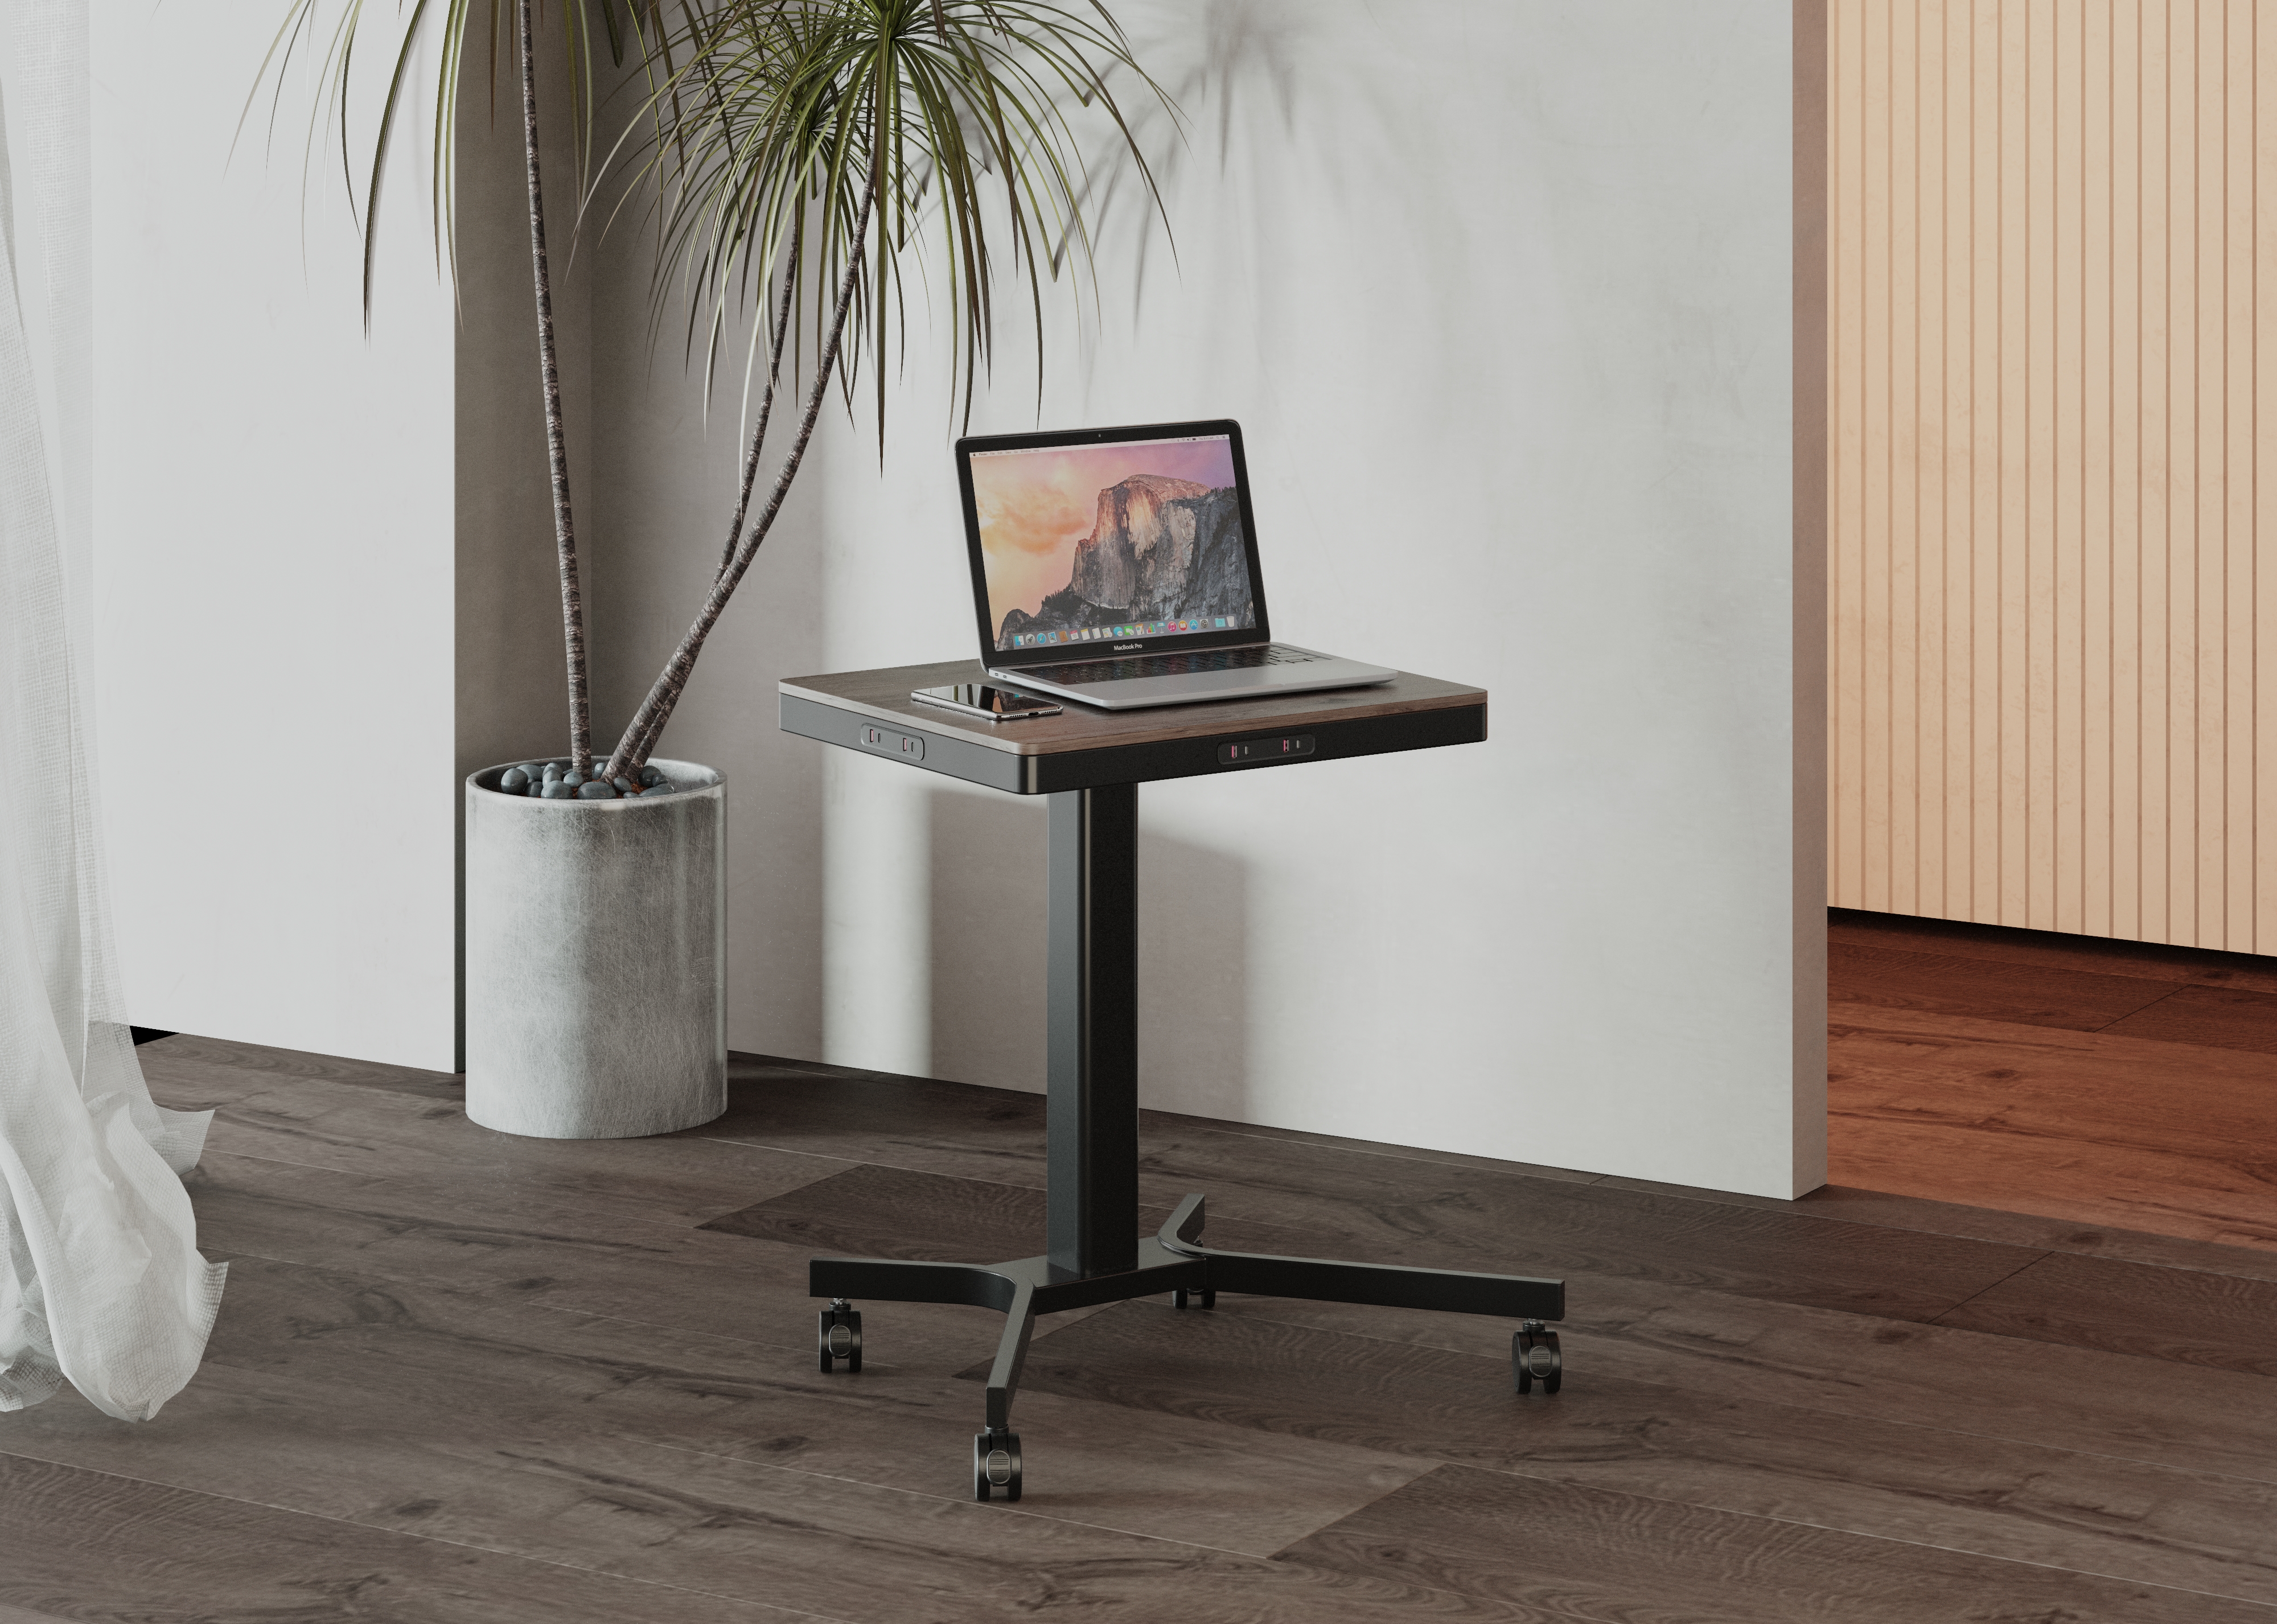 Movable Charging Desk With USB Ports Aside The Desktop